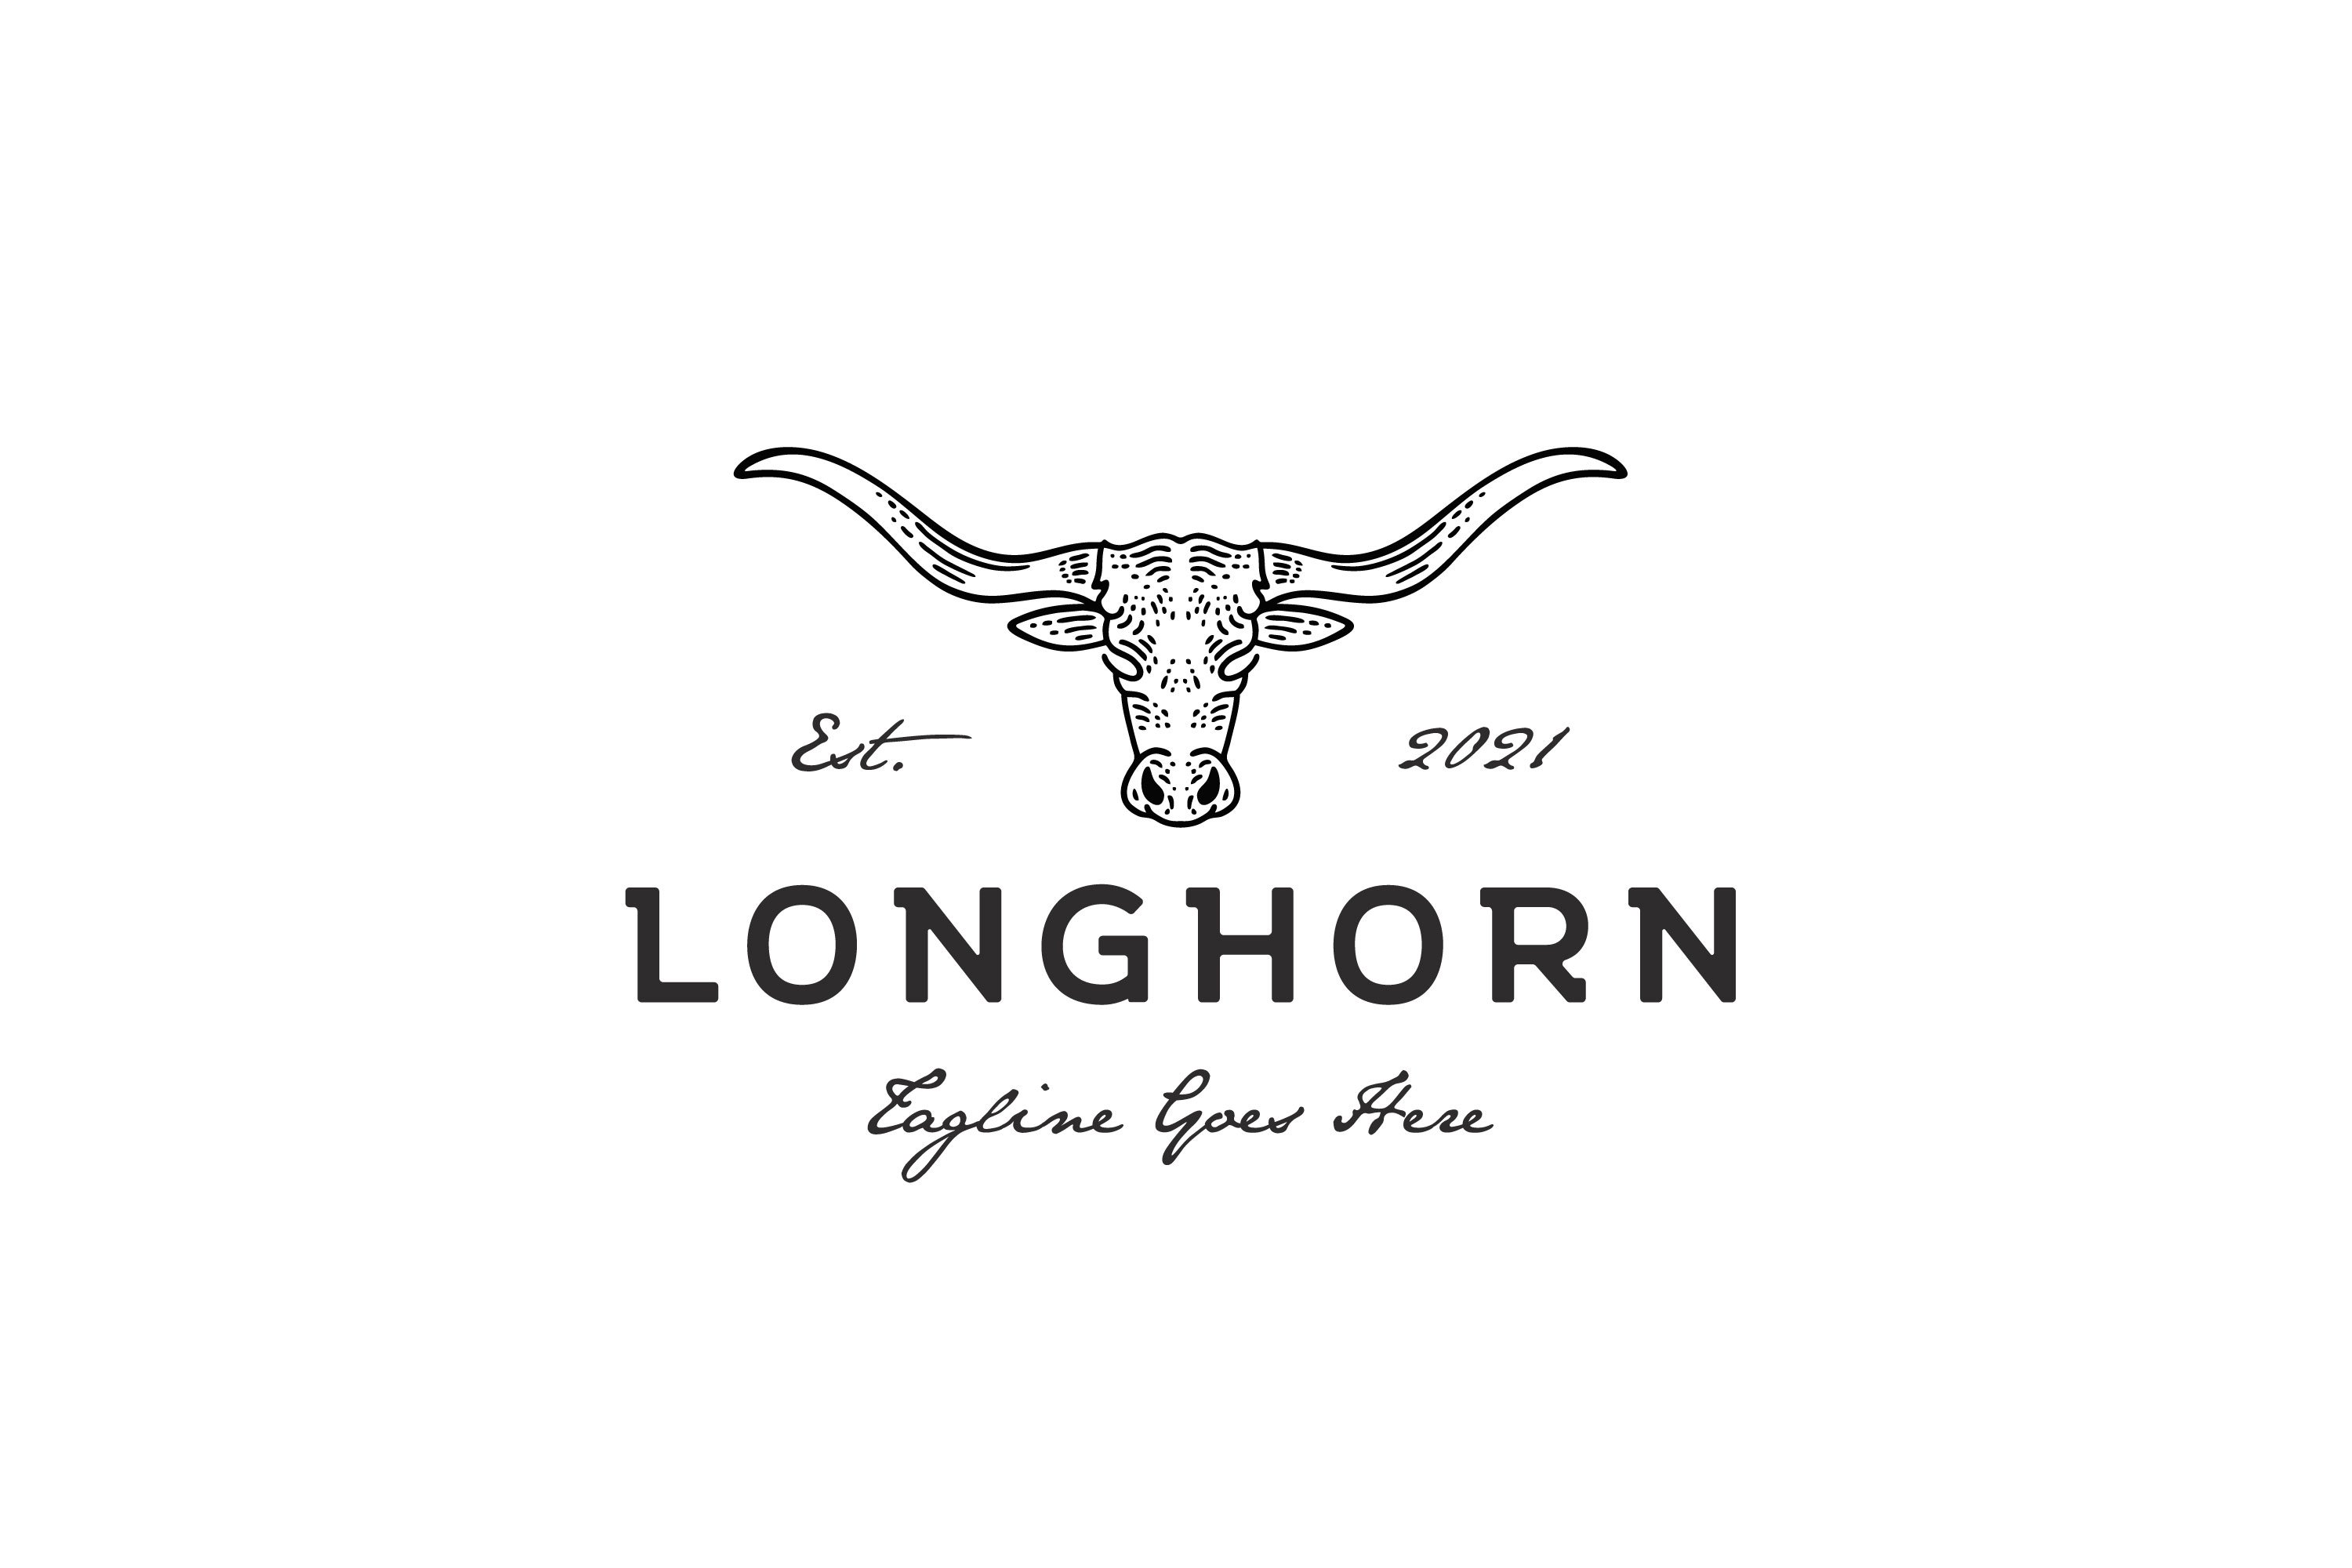 Texas Longhorn Logo Design cover image.